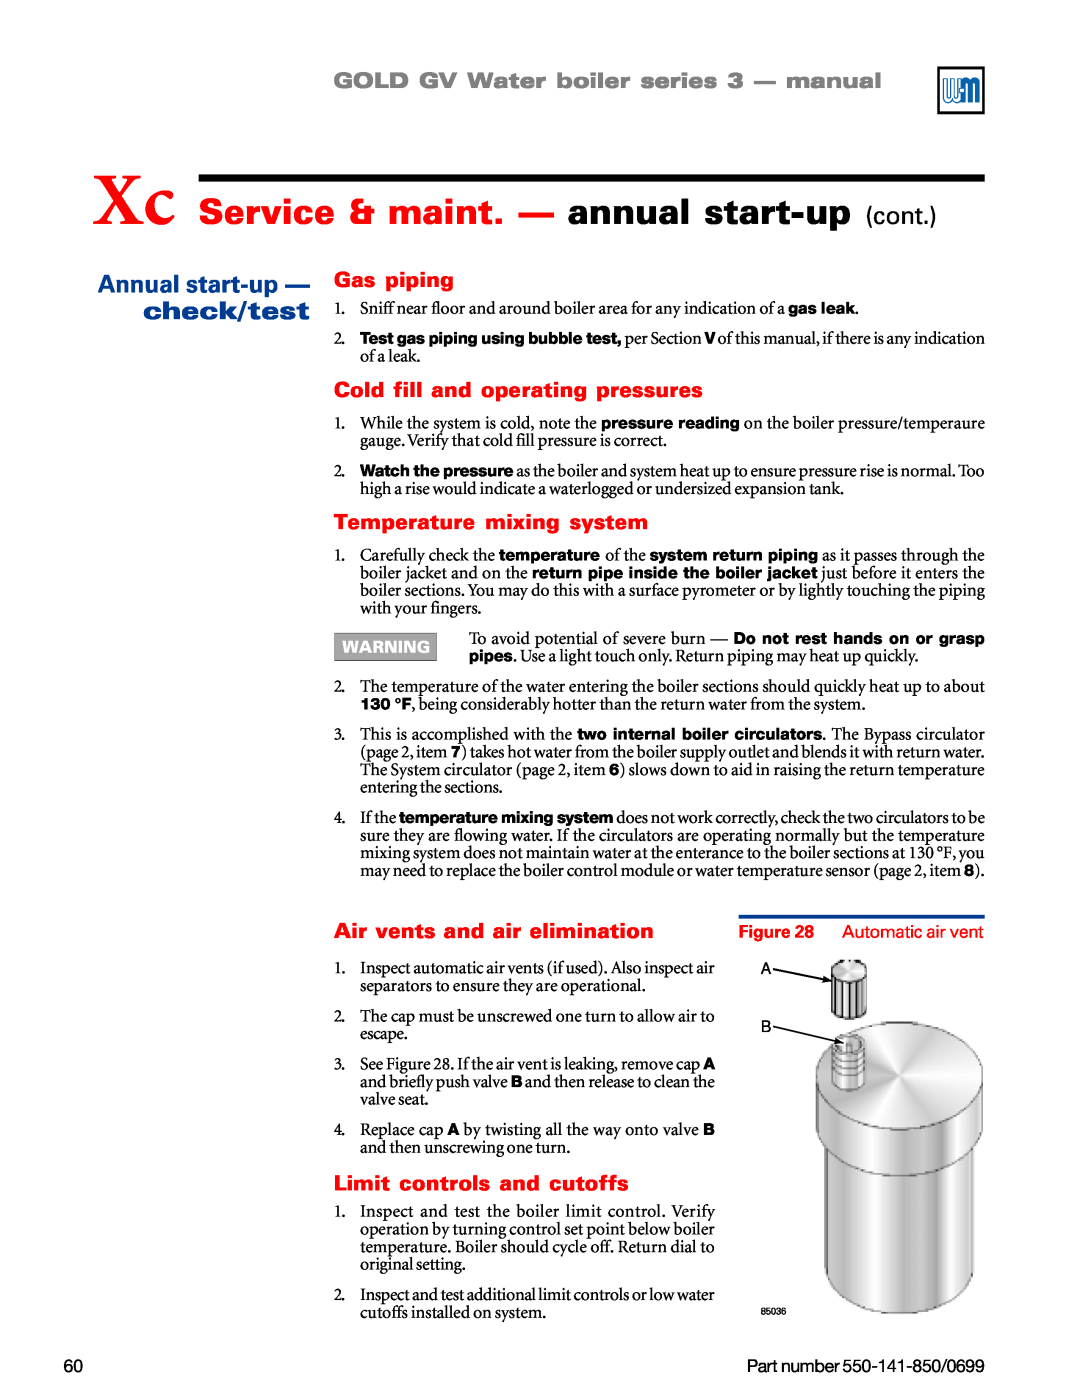 Weil-McLain GOLD DV WATER BOILER manual Xc Service & maint. — annual start-up cont, Annual start-up— check/test, Gas piping 